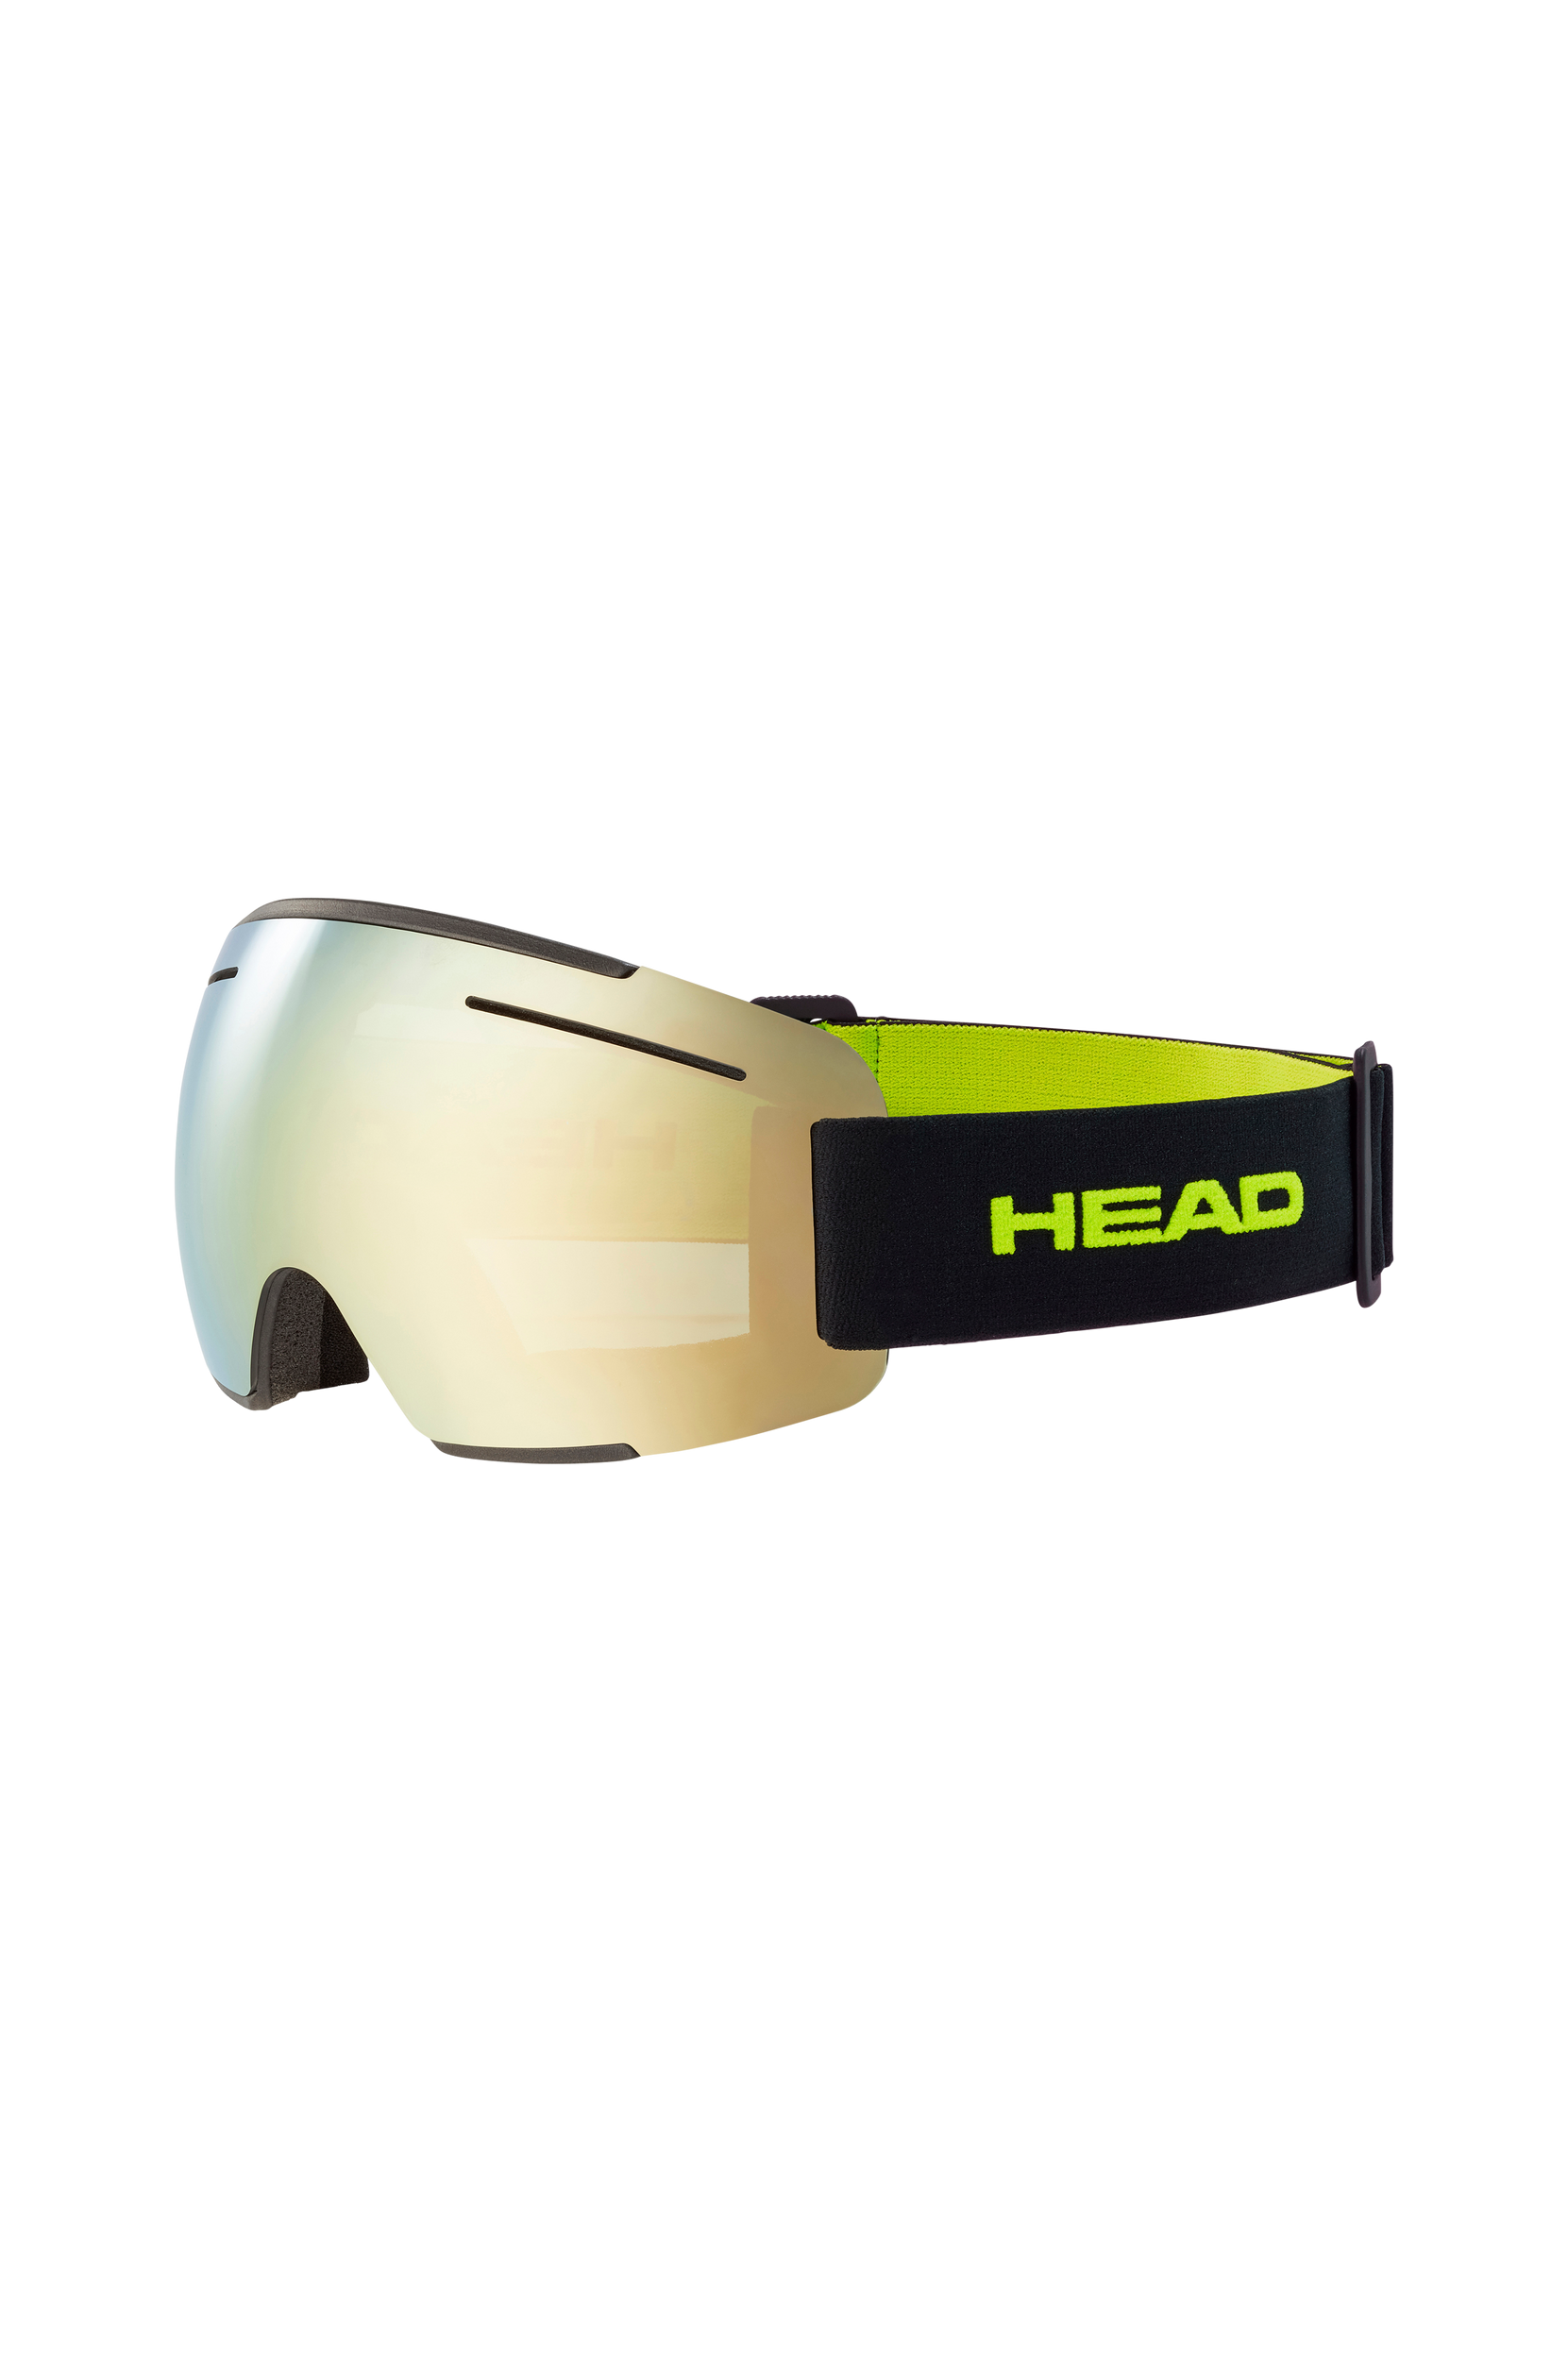 Head - Skidglasögon / goggles F-LYT Lime Black Senior - Grön - L